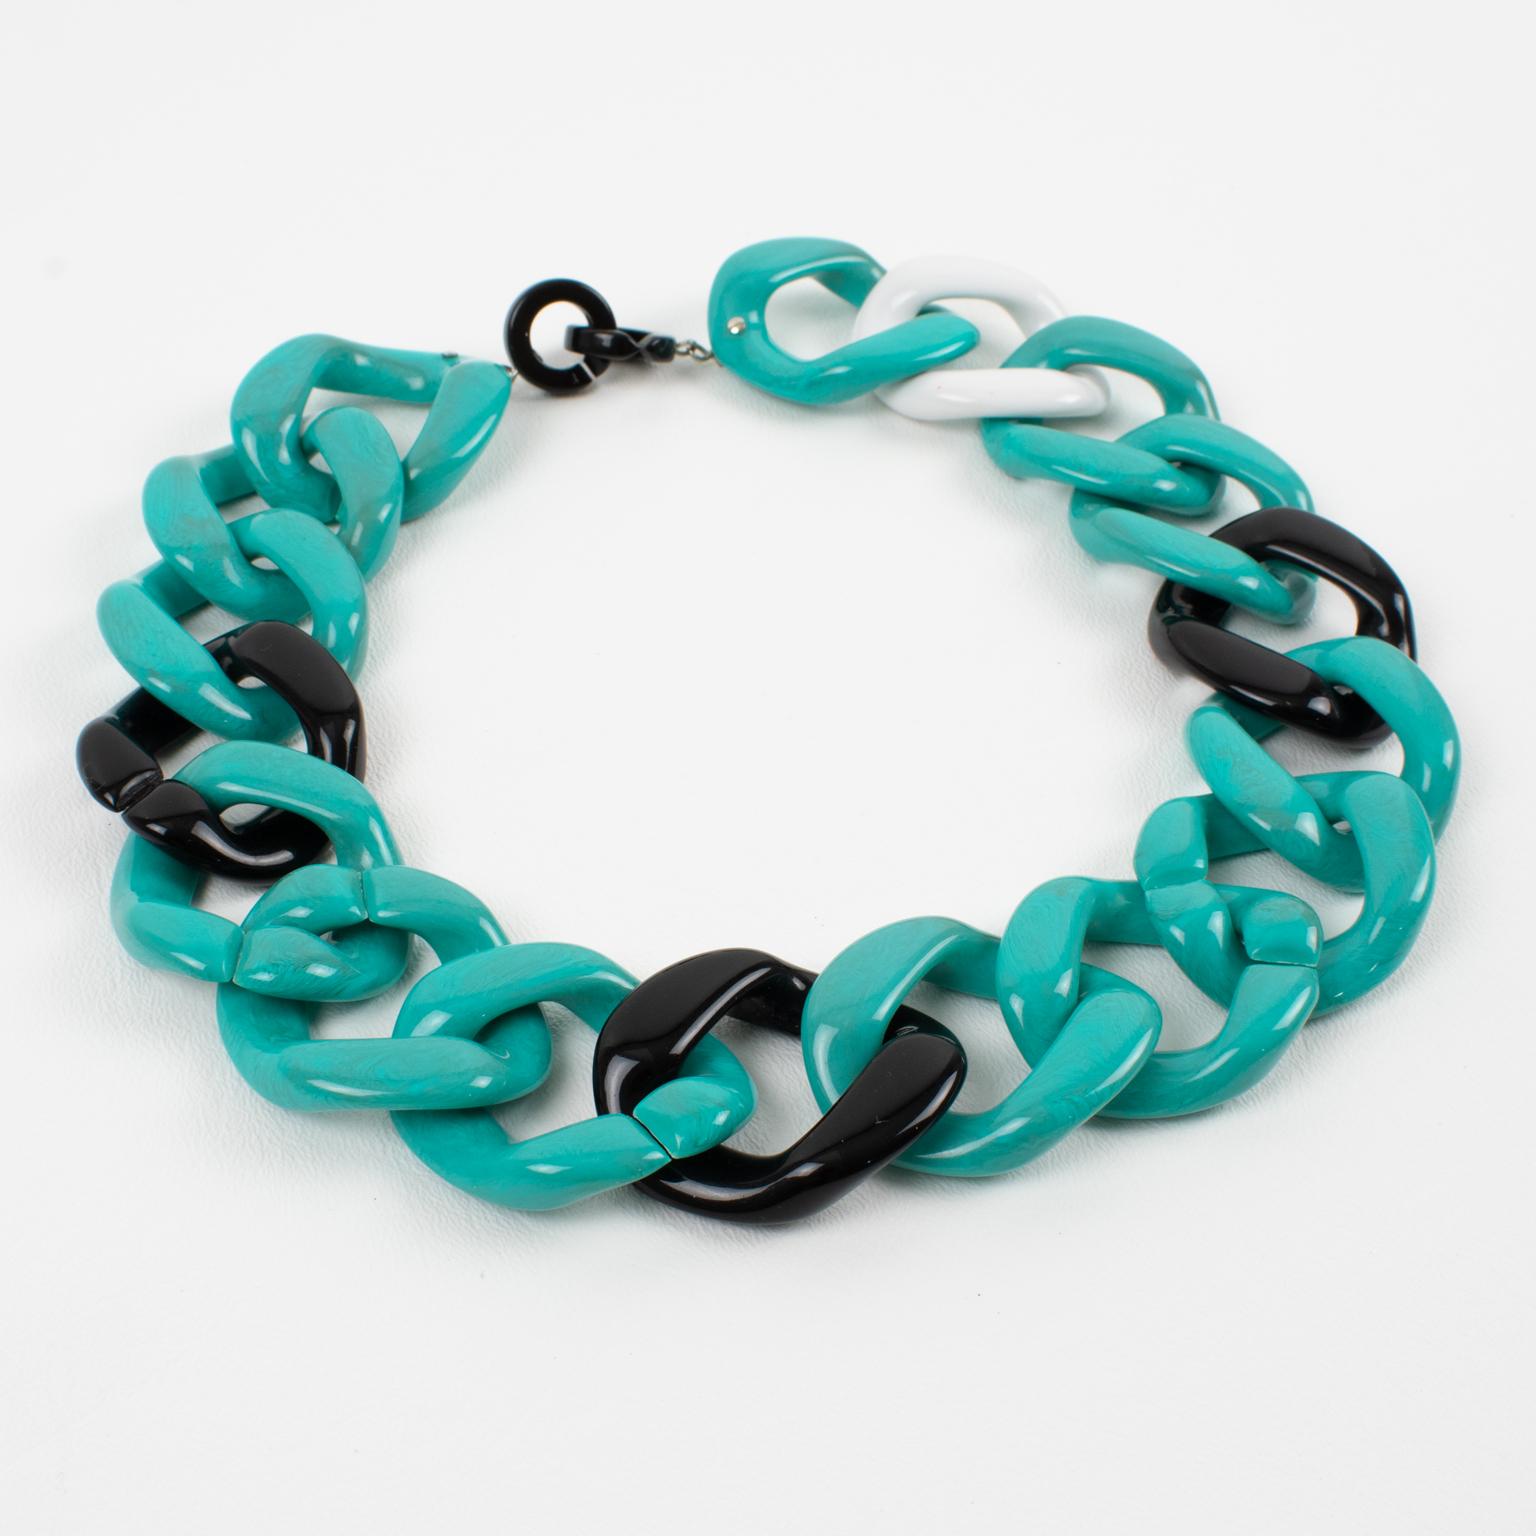 Modern Angela Caputi Italy Choker Necklace Massive Turquoise Resin Chain